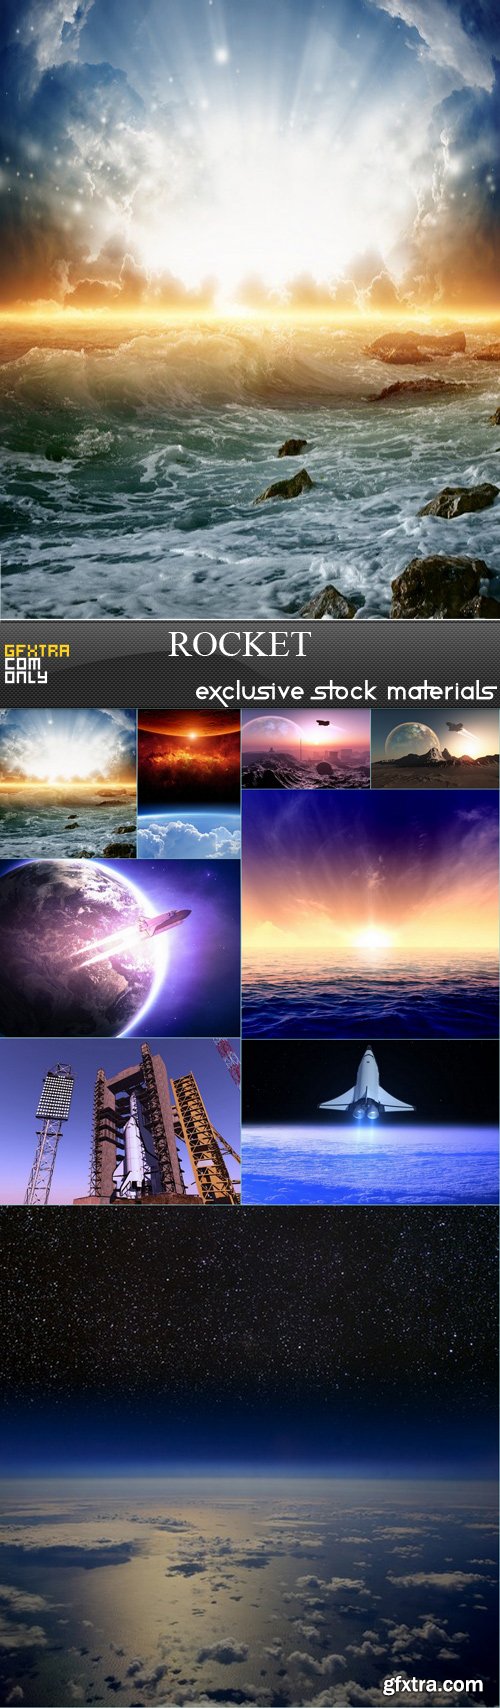 Rocket - 9 JPRGs